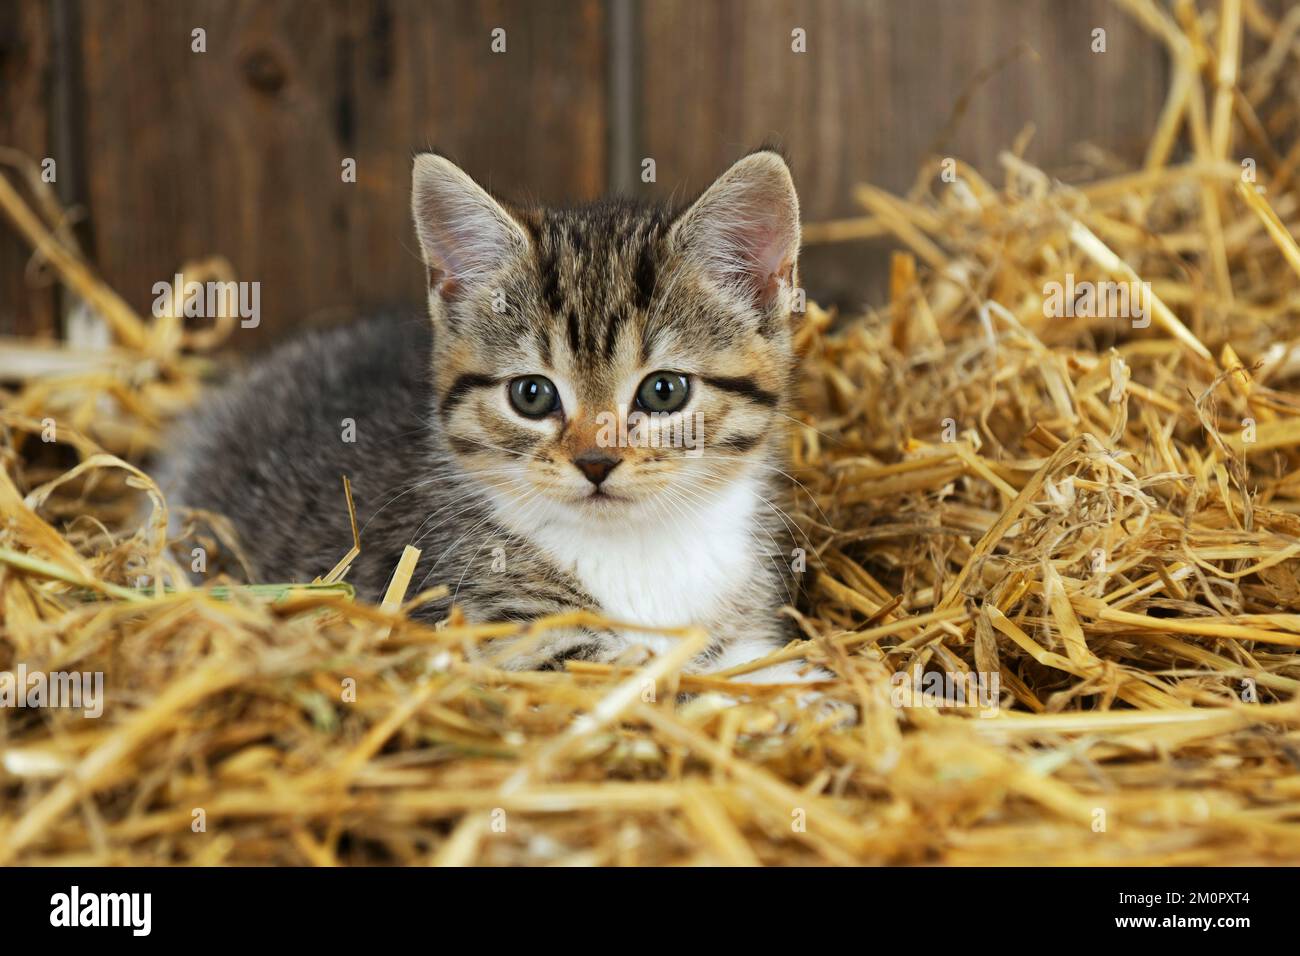 https://c8.alamy.com/comp/2M0PXT4/cat-kitten-sitting-in-straw-2M0PXT4.jpg